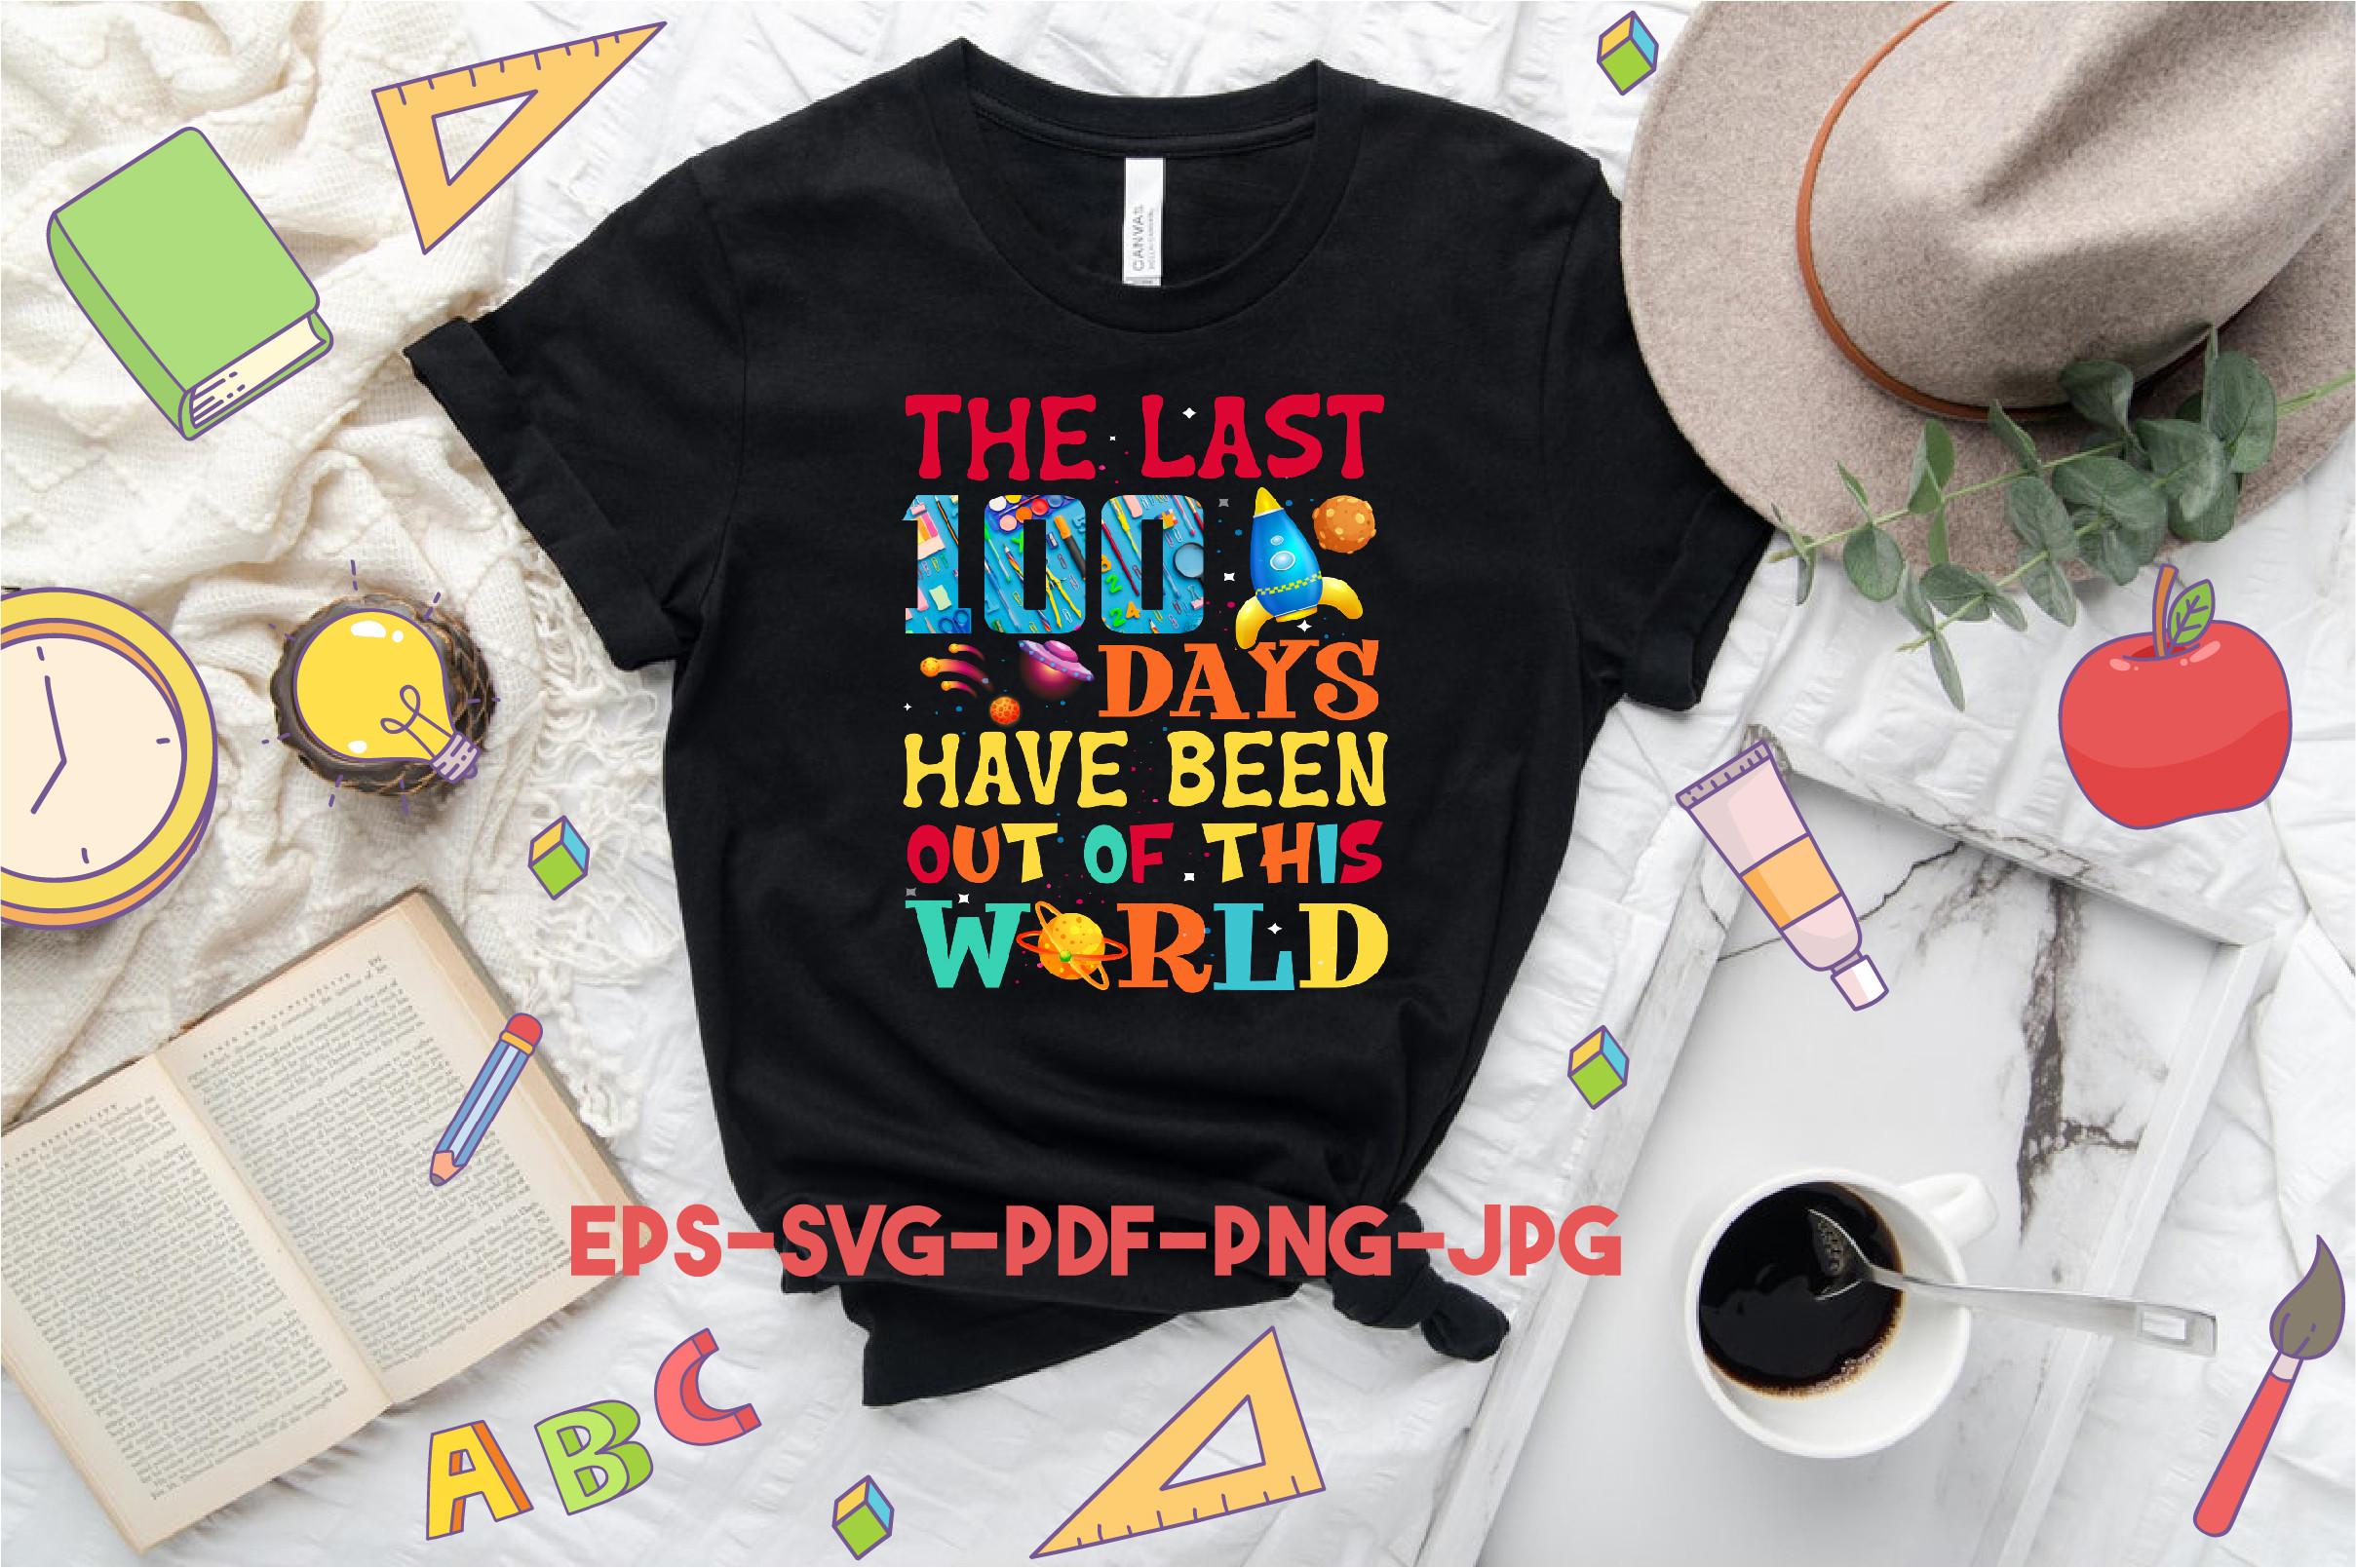 World 100 Days of School T-Shirt Design